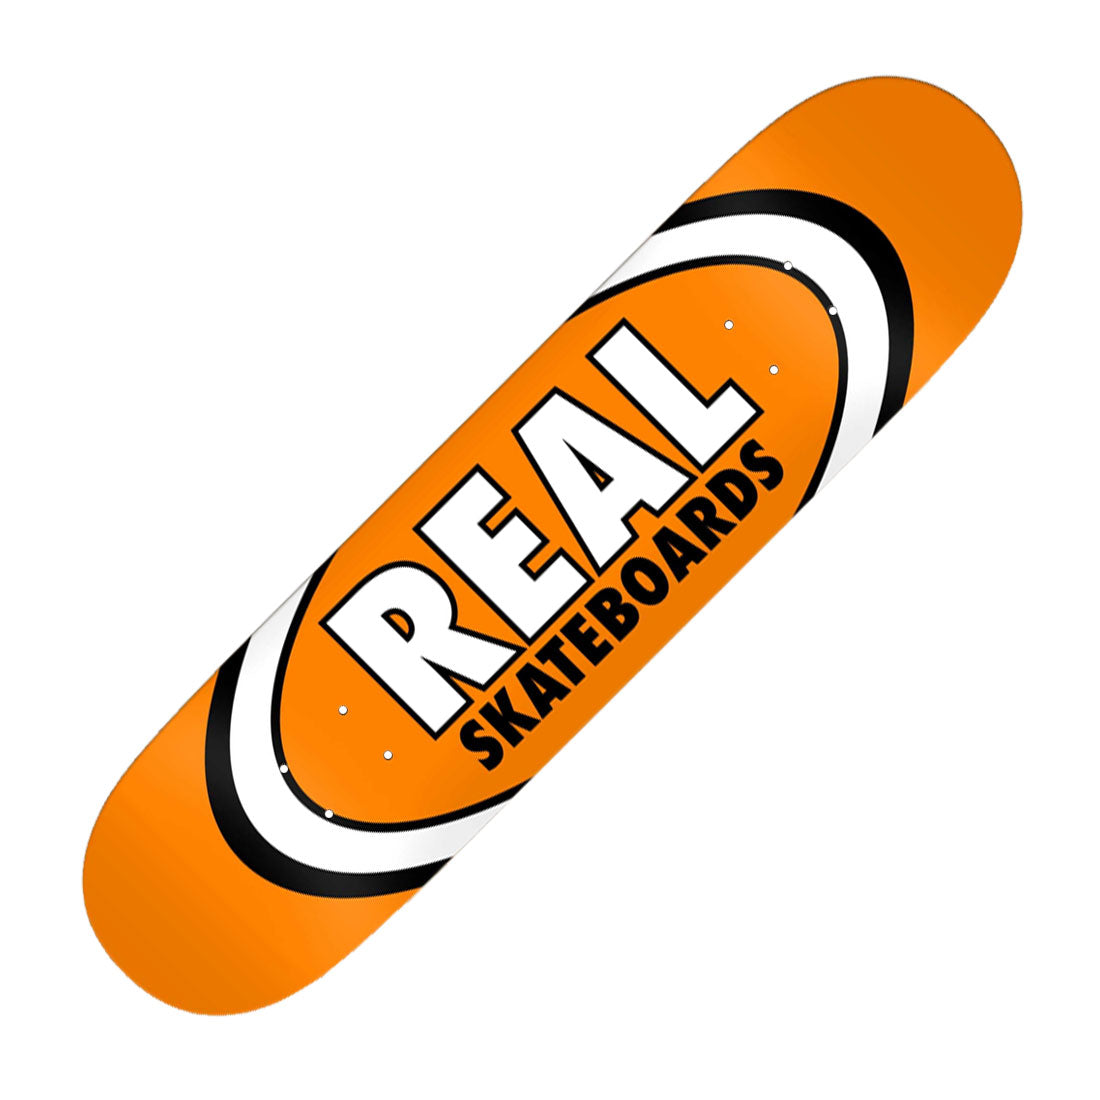 Real Skateboards Classic Oval Skateboard Deck - 7.5 x 29